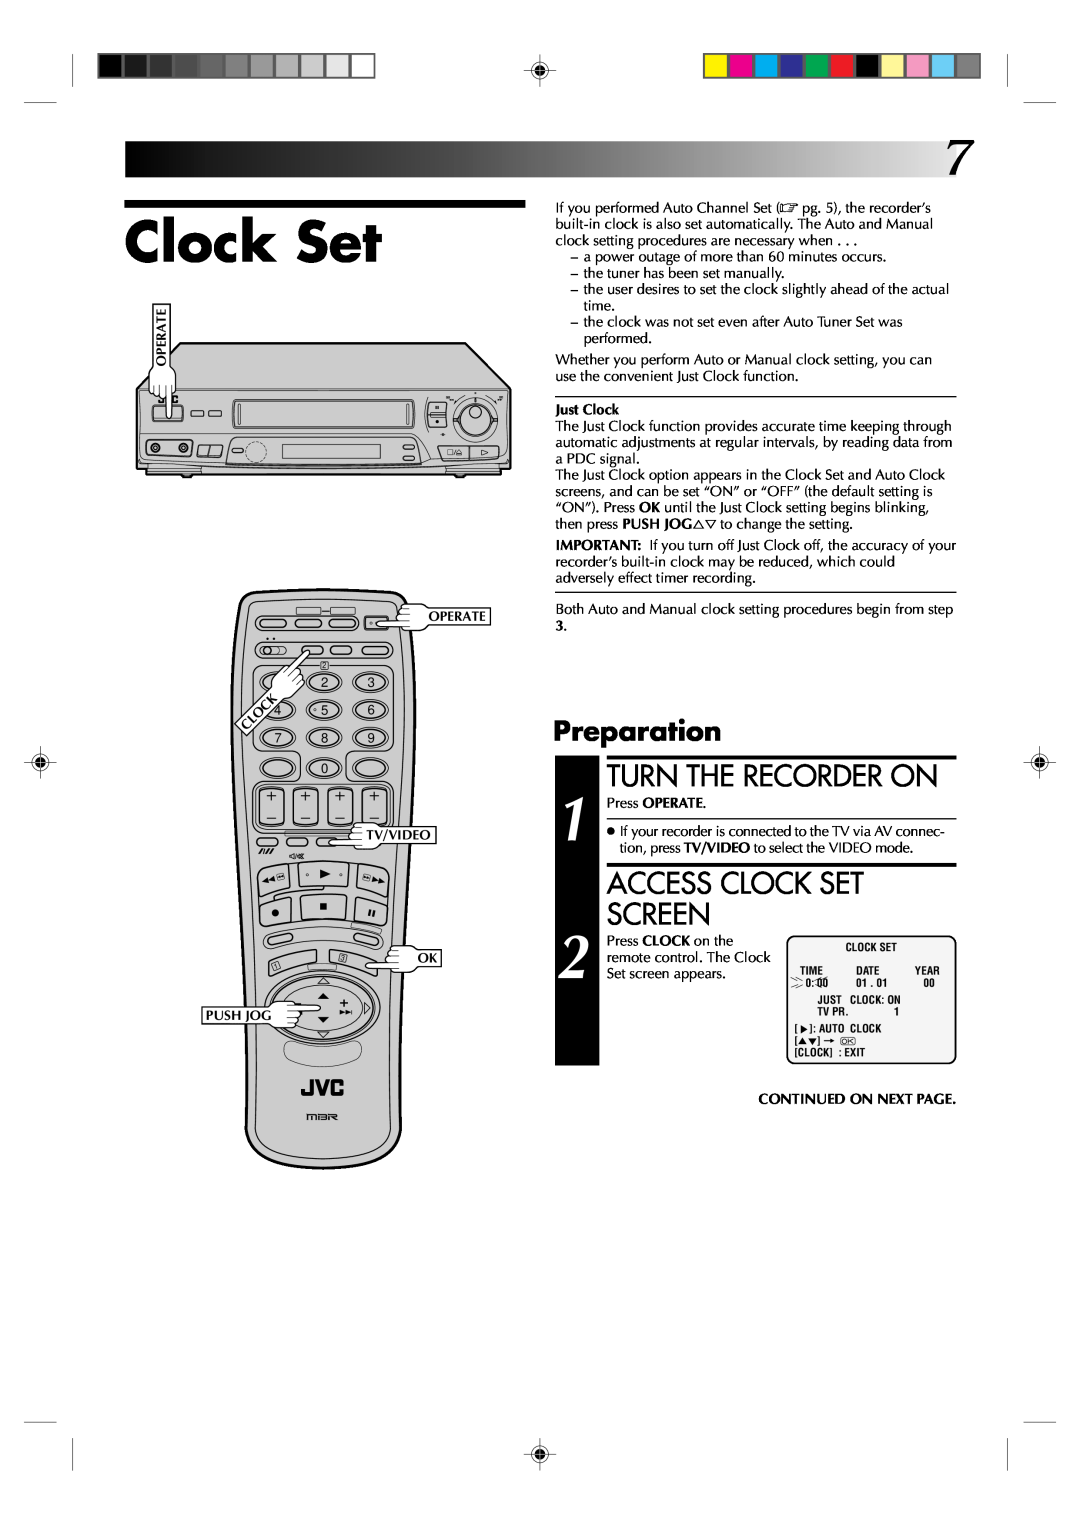 JVC HR-J238E, HR-J438E Access Clock Set, Screen, Preparation, Turn The Recorder On, Just Clock, Press OPERATE 